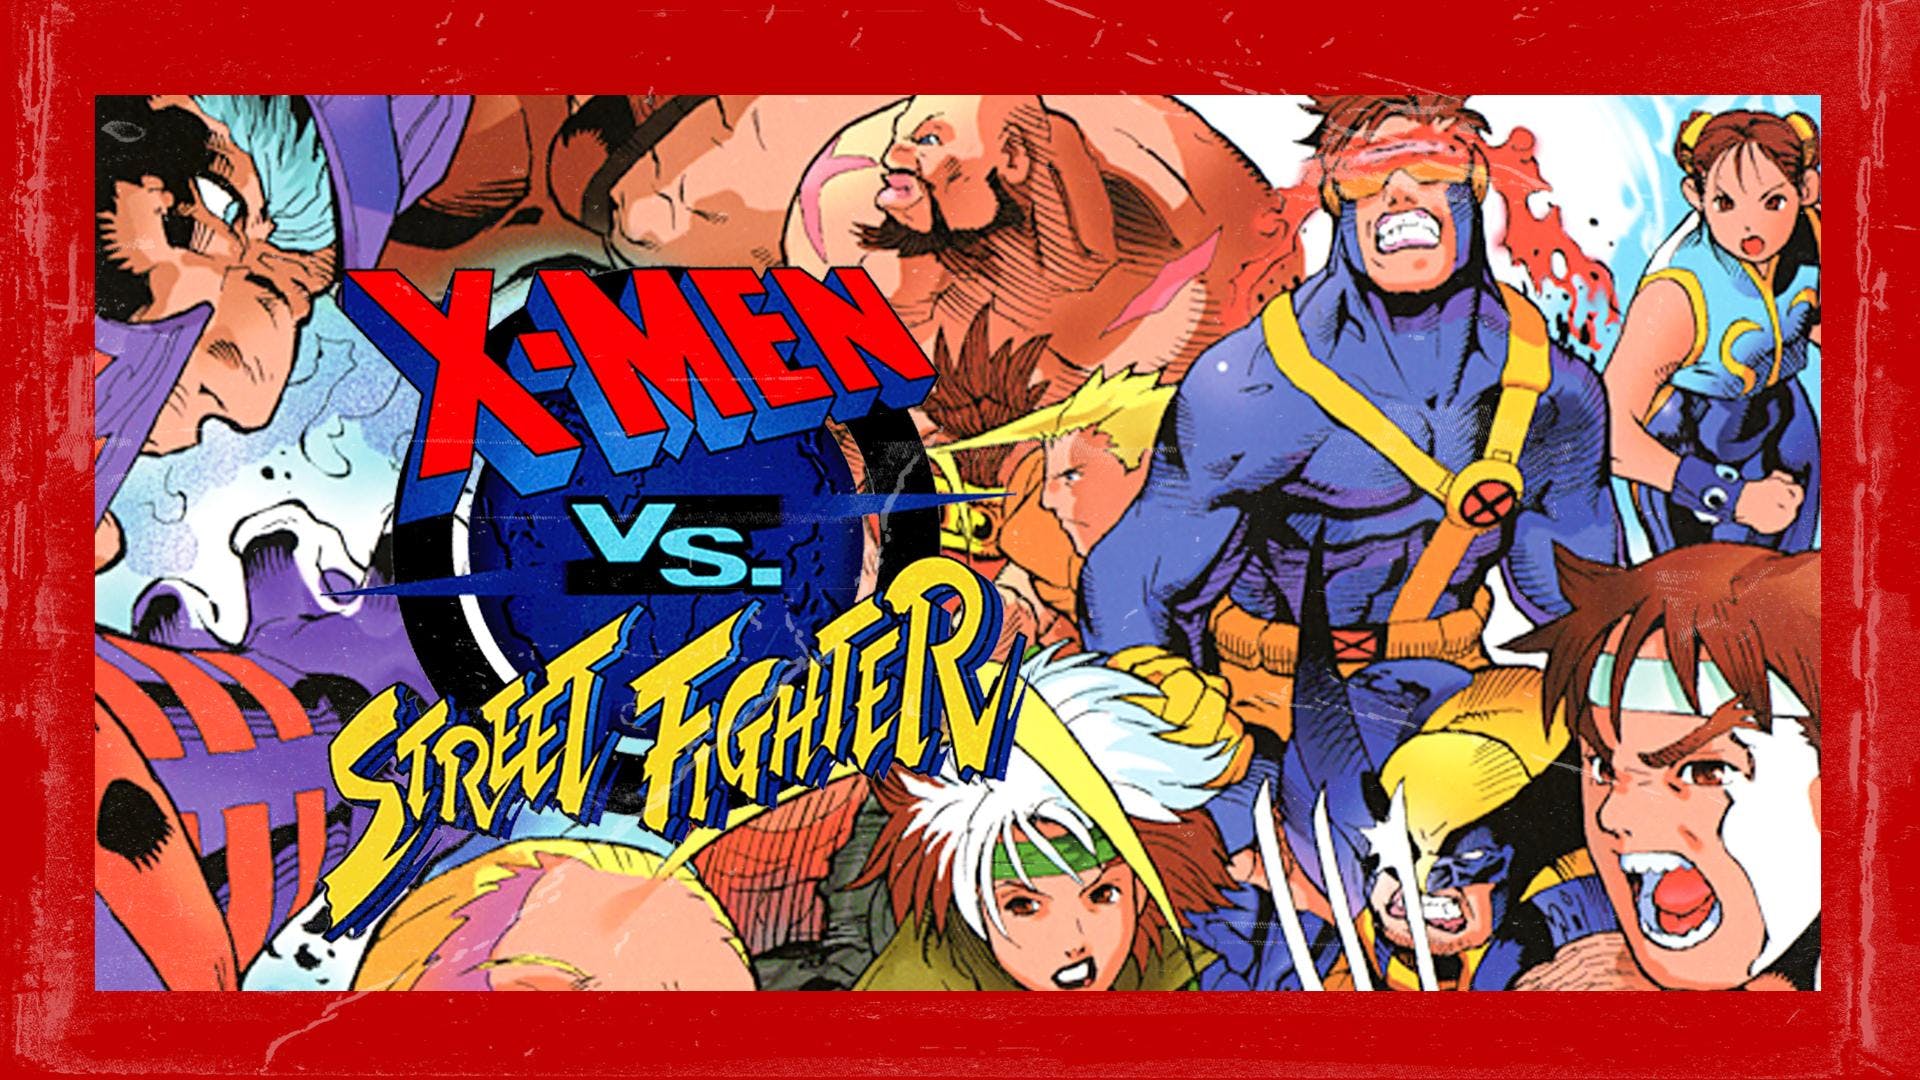 xmen vs street fighter soundtrack download